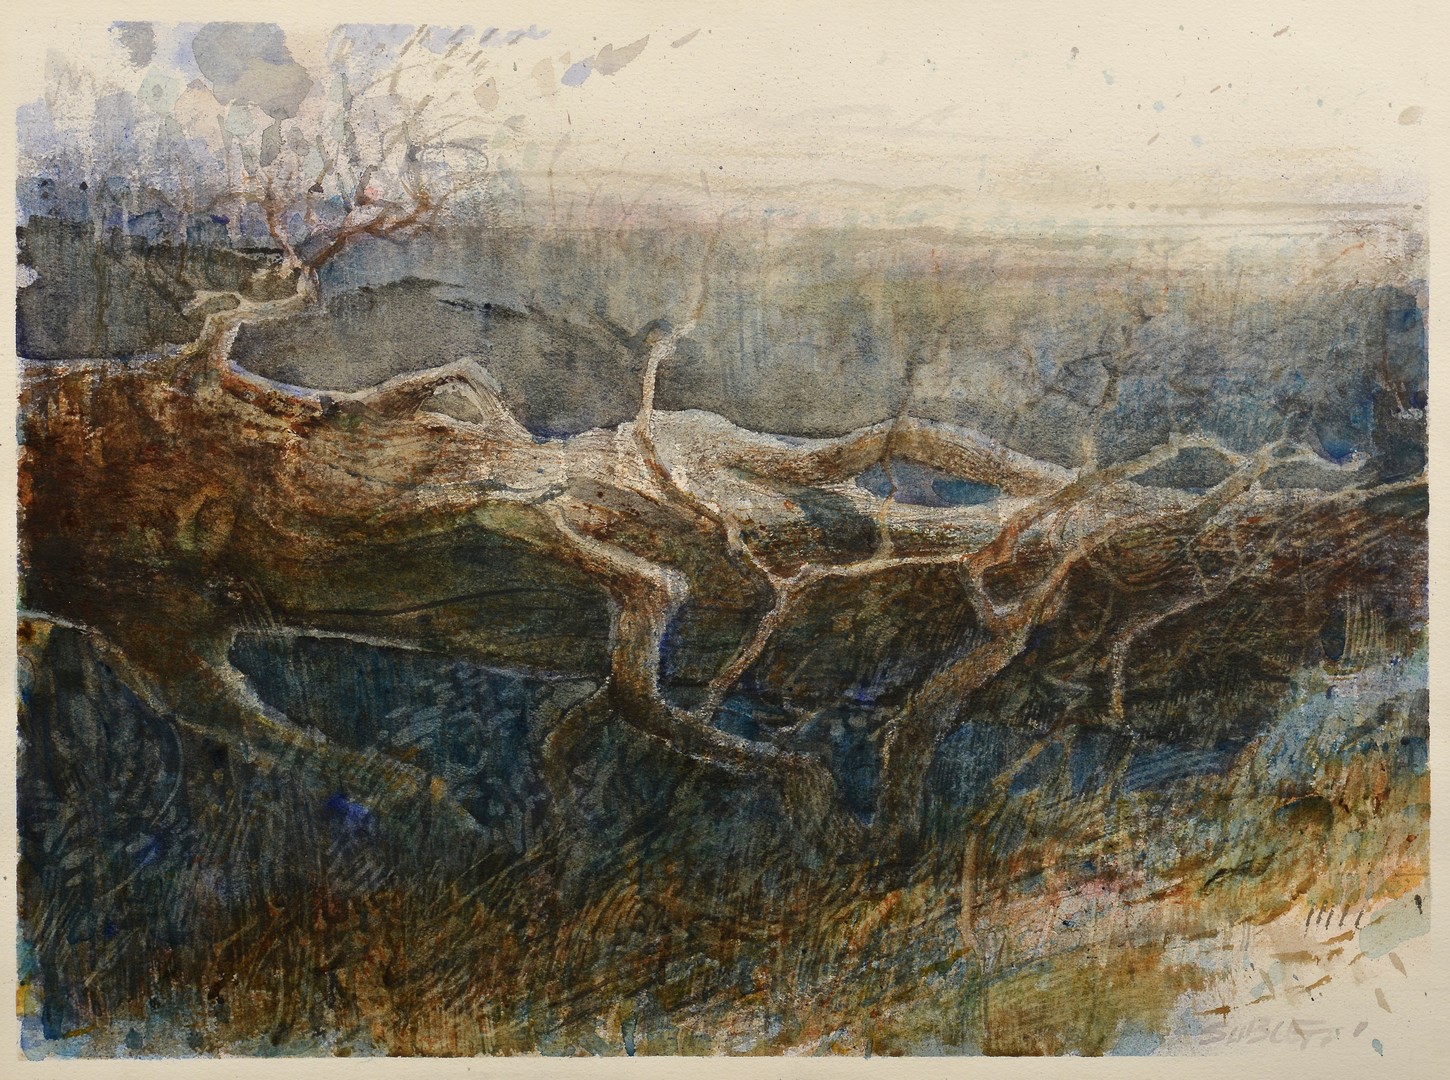 Lot 662: 2 Carl Sublett Watercolor landscapes